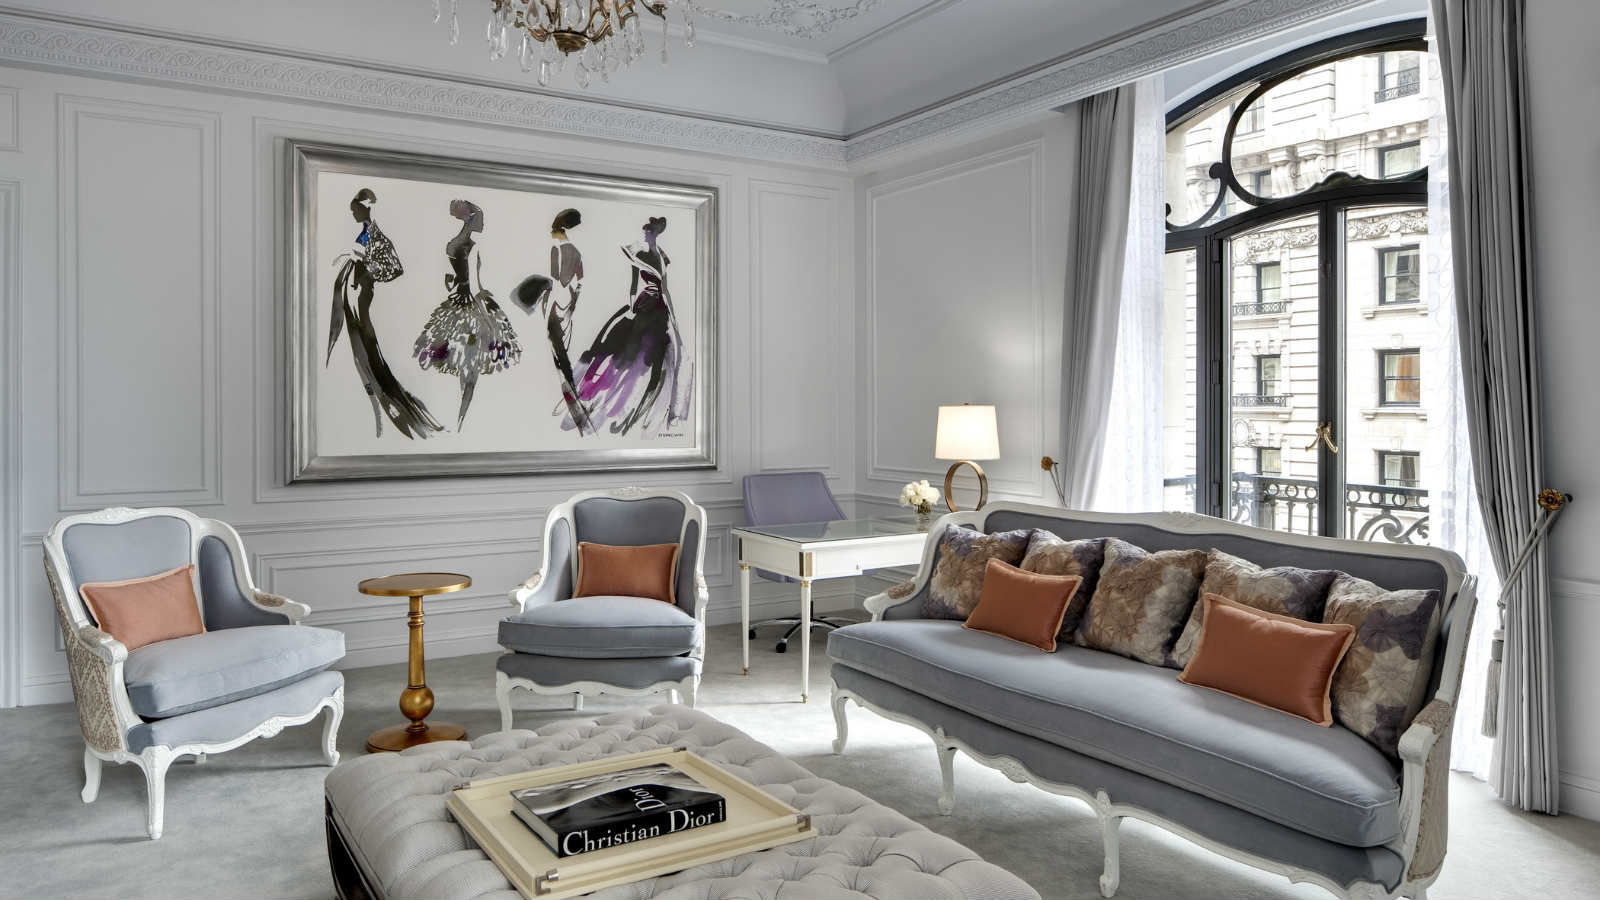 Dior Suite Living Room St. regis new york